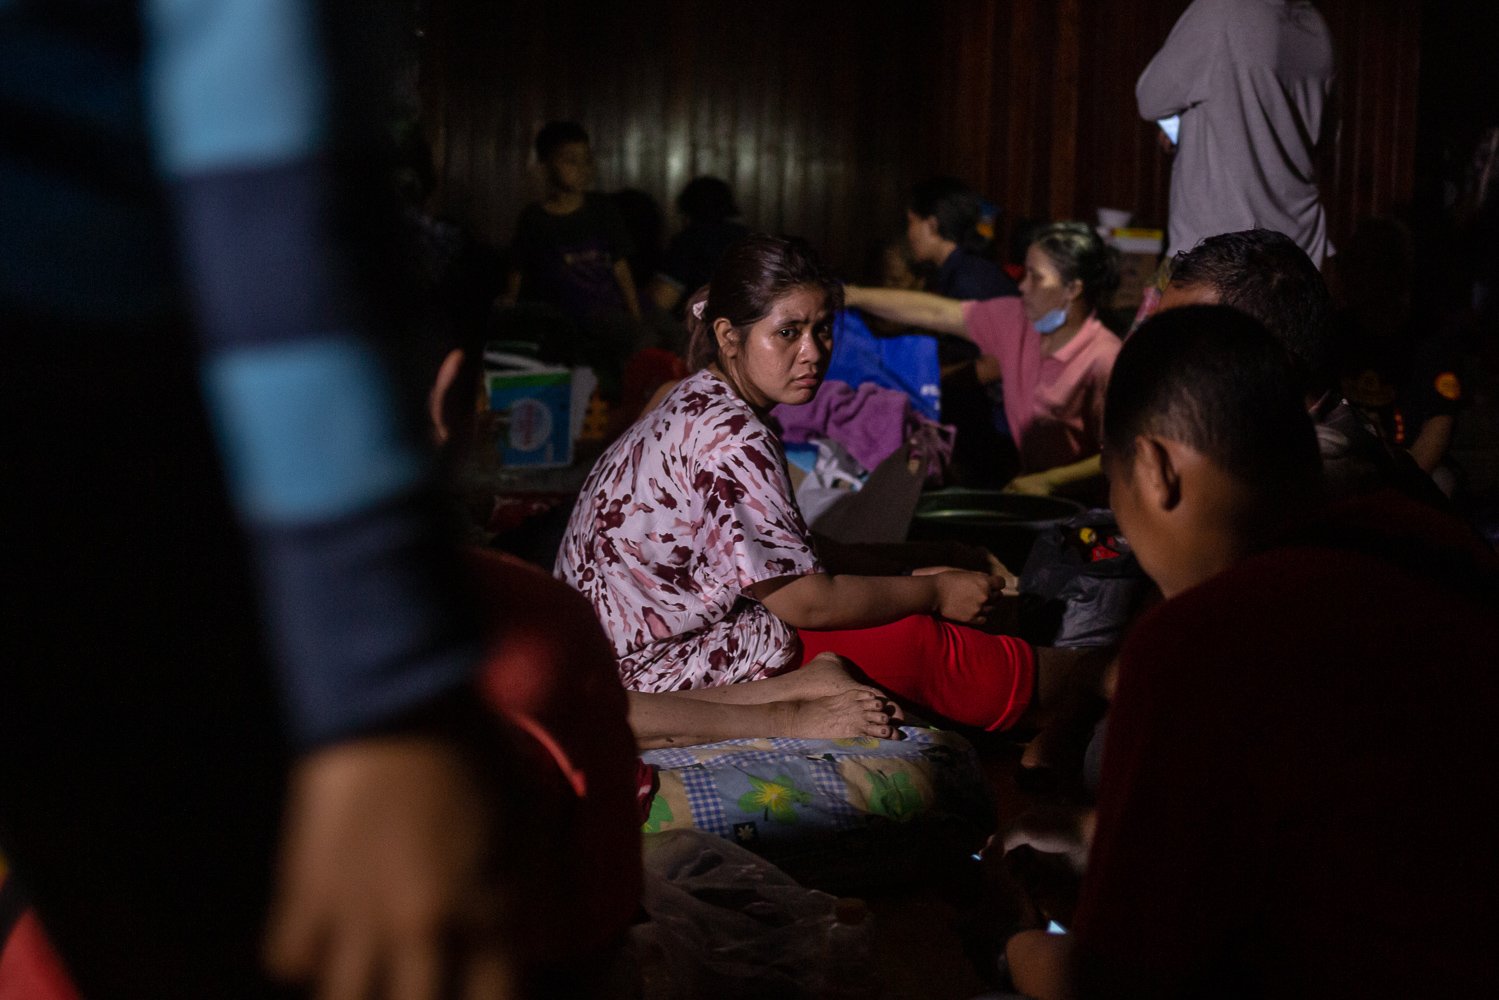 Warga terdampak kebakaran mengungsi di rumah pengungsian sementara di Jalan Simprug Golf II, Kebayoran Lama, Jakarta, Minggu (21/8). Akibat peristiwa tersebut 1 orang meninggal dunia diduga akibat kaget dan kelelahan. Selain itu, sebanyak 383 jiwa dari 164 KK harus mengungsi di tenda darurat.